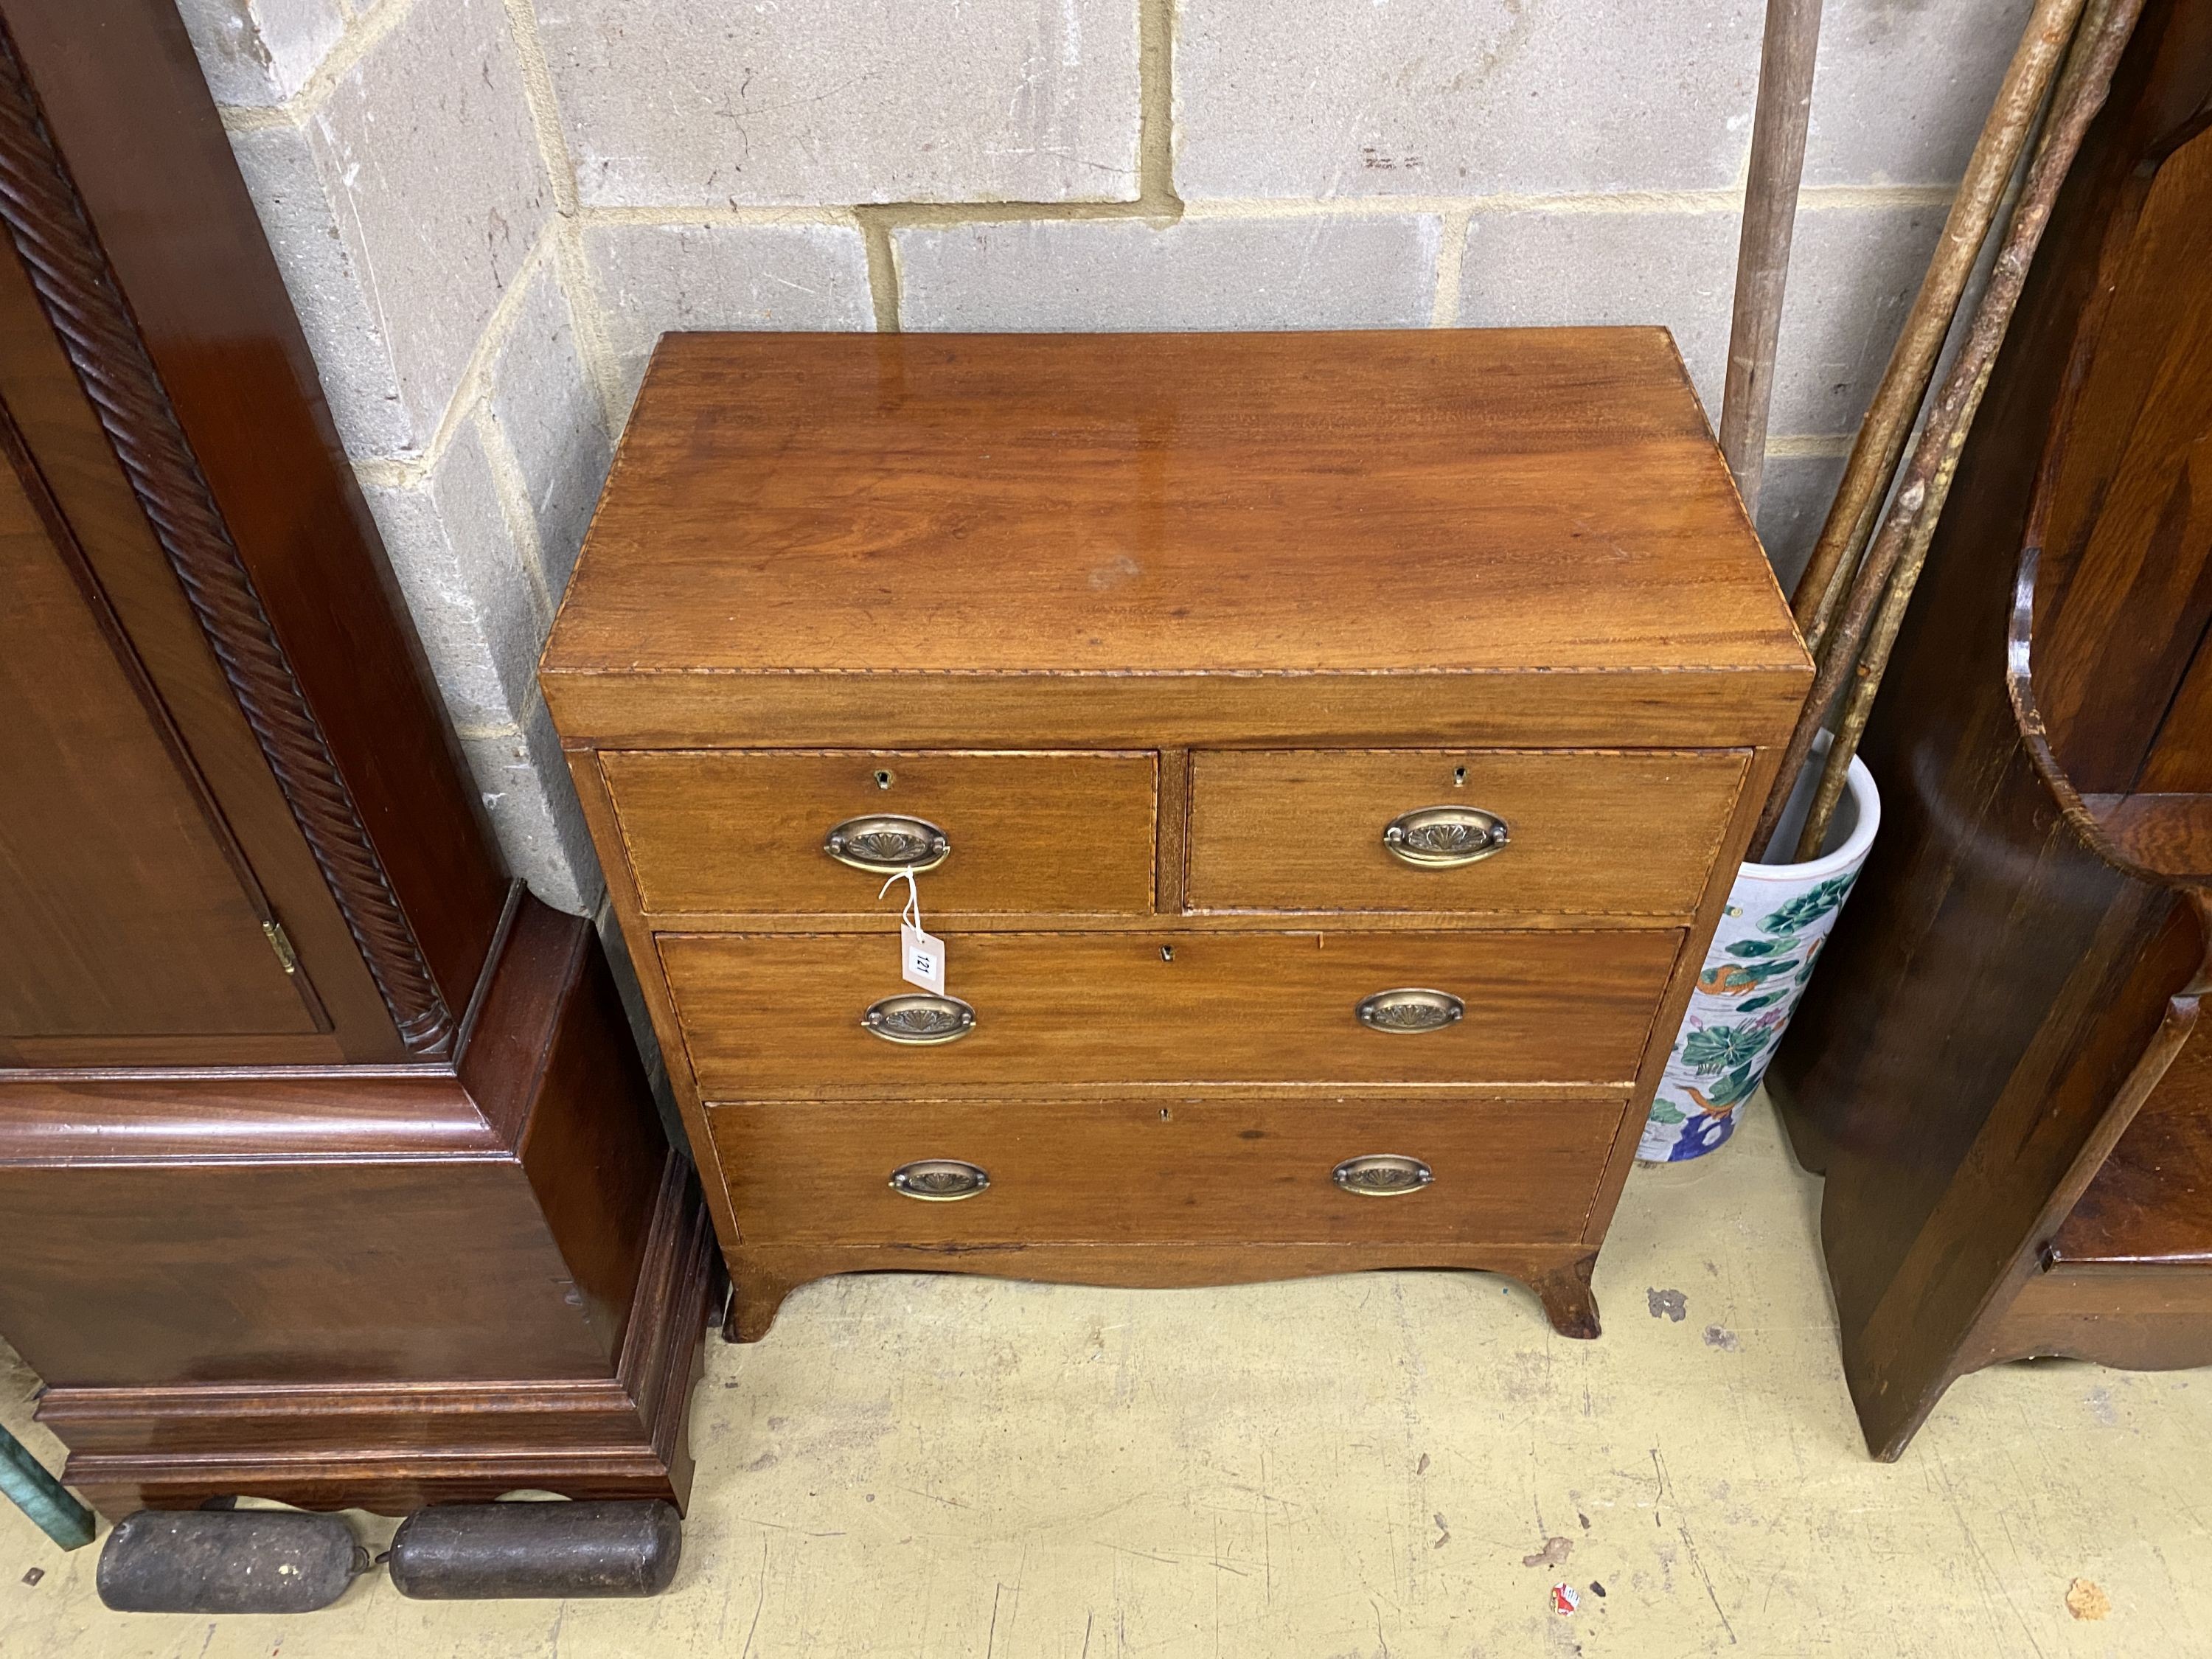 A small Regency mahogany four drawer chest, width 80cm, depth 43cm, height 82cm